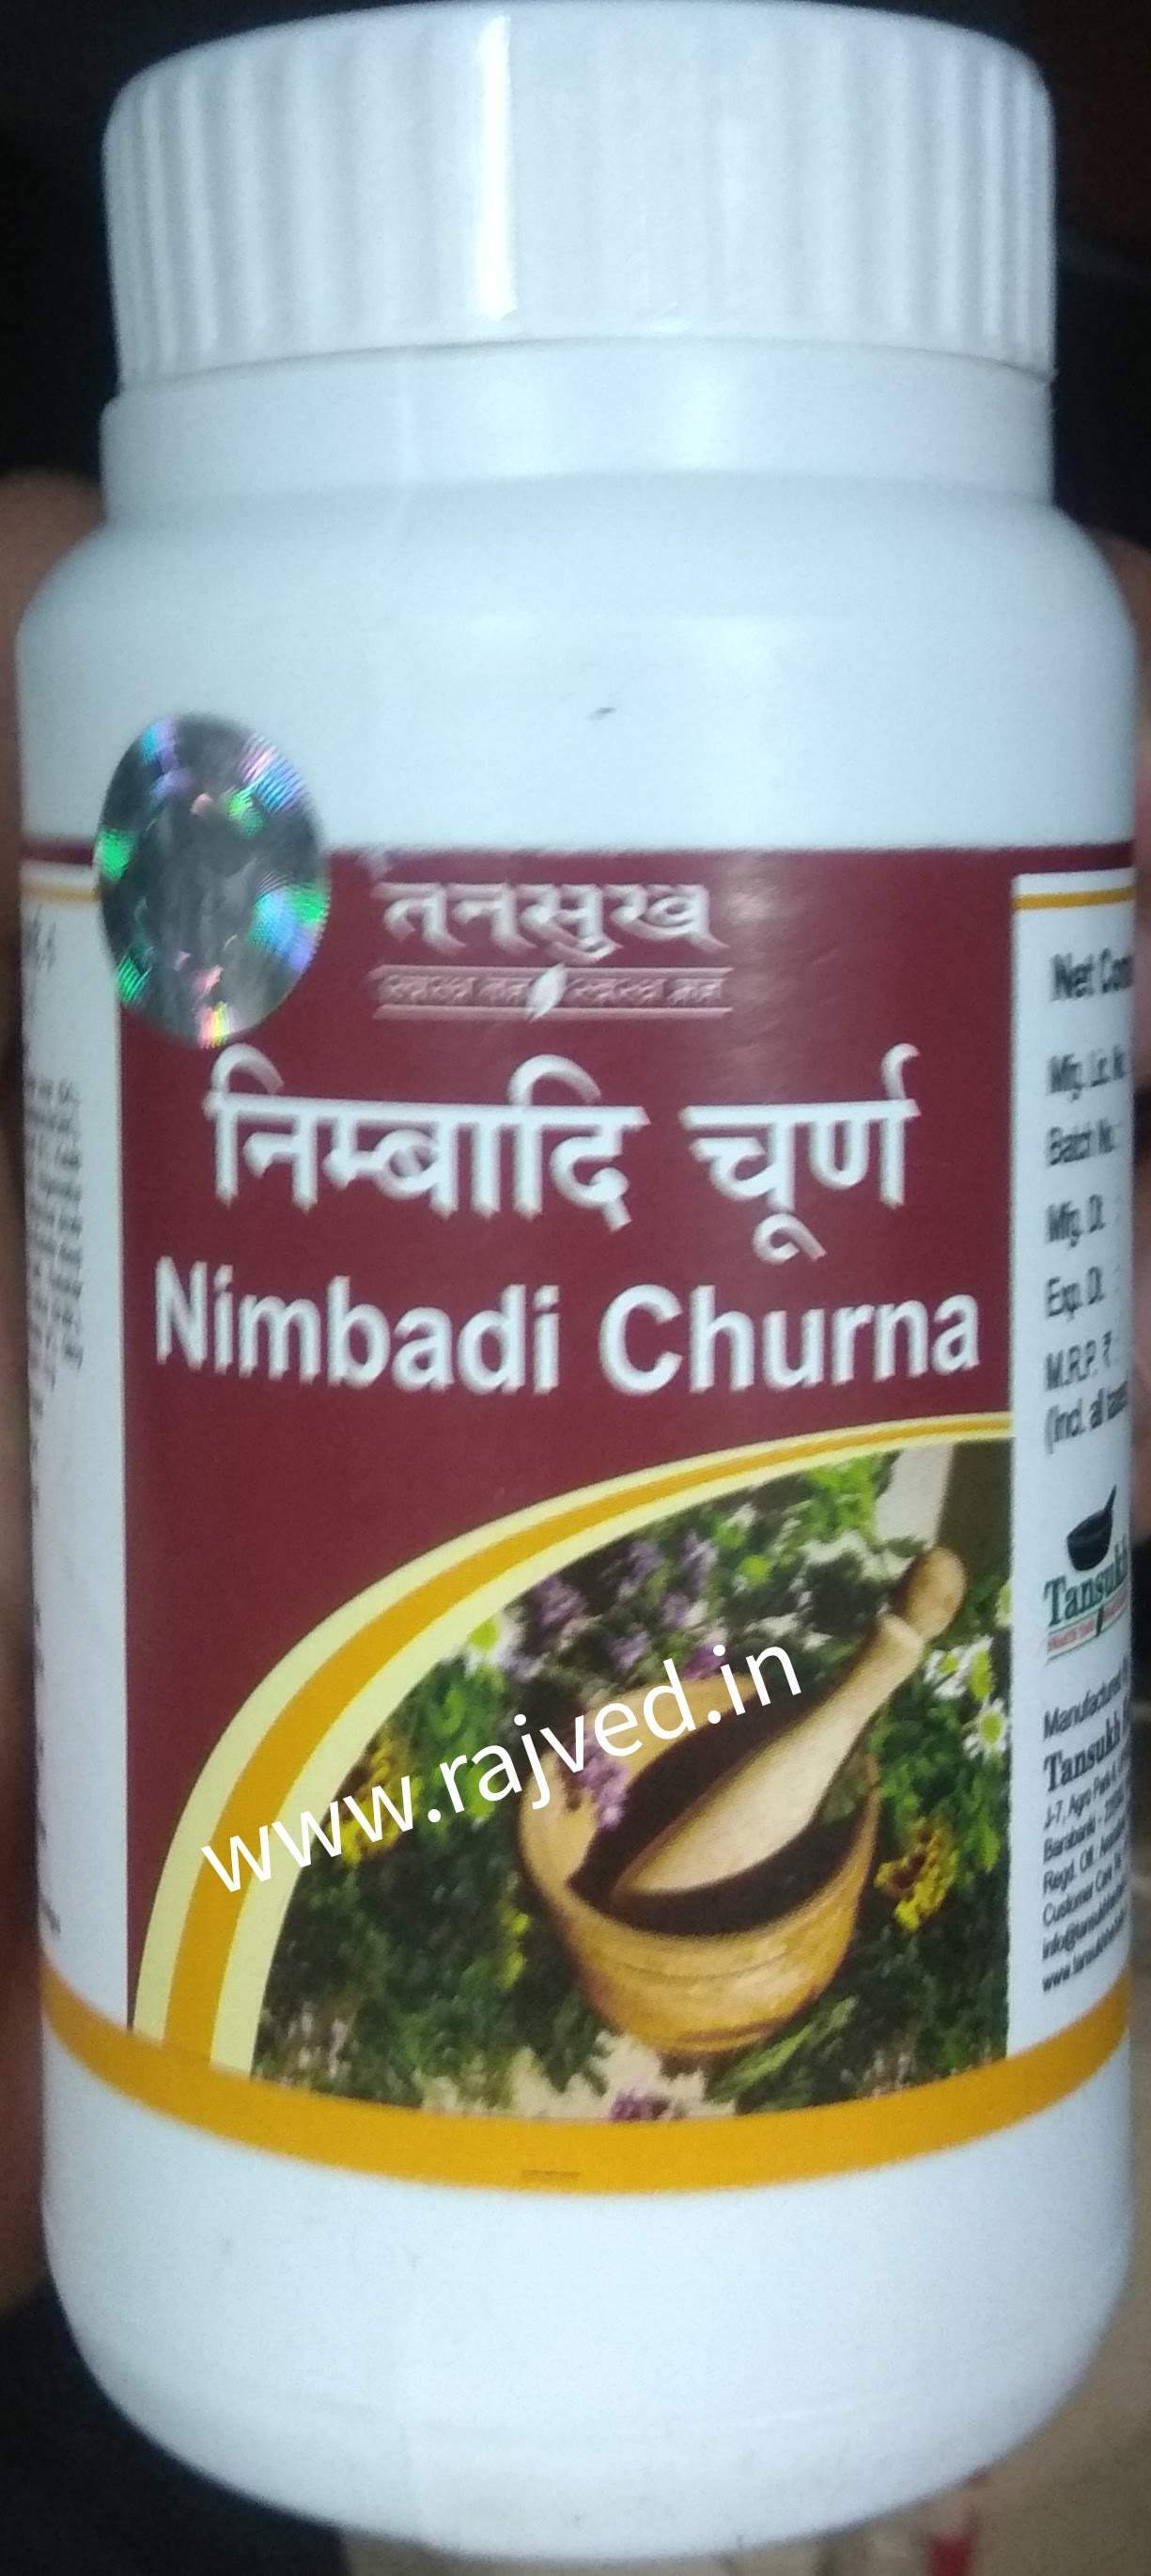 Nimbadi Churna 1 kg upto 10% off tansukh herbals